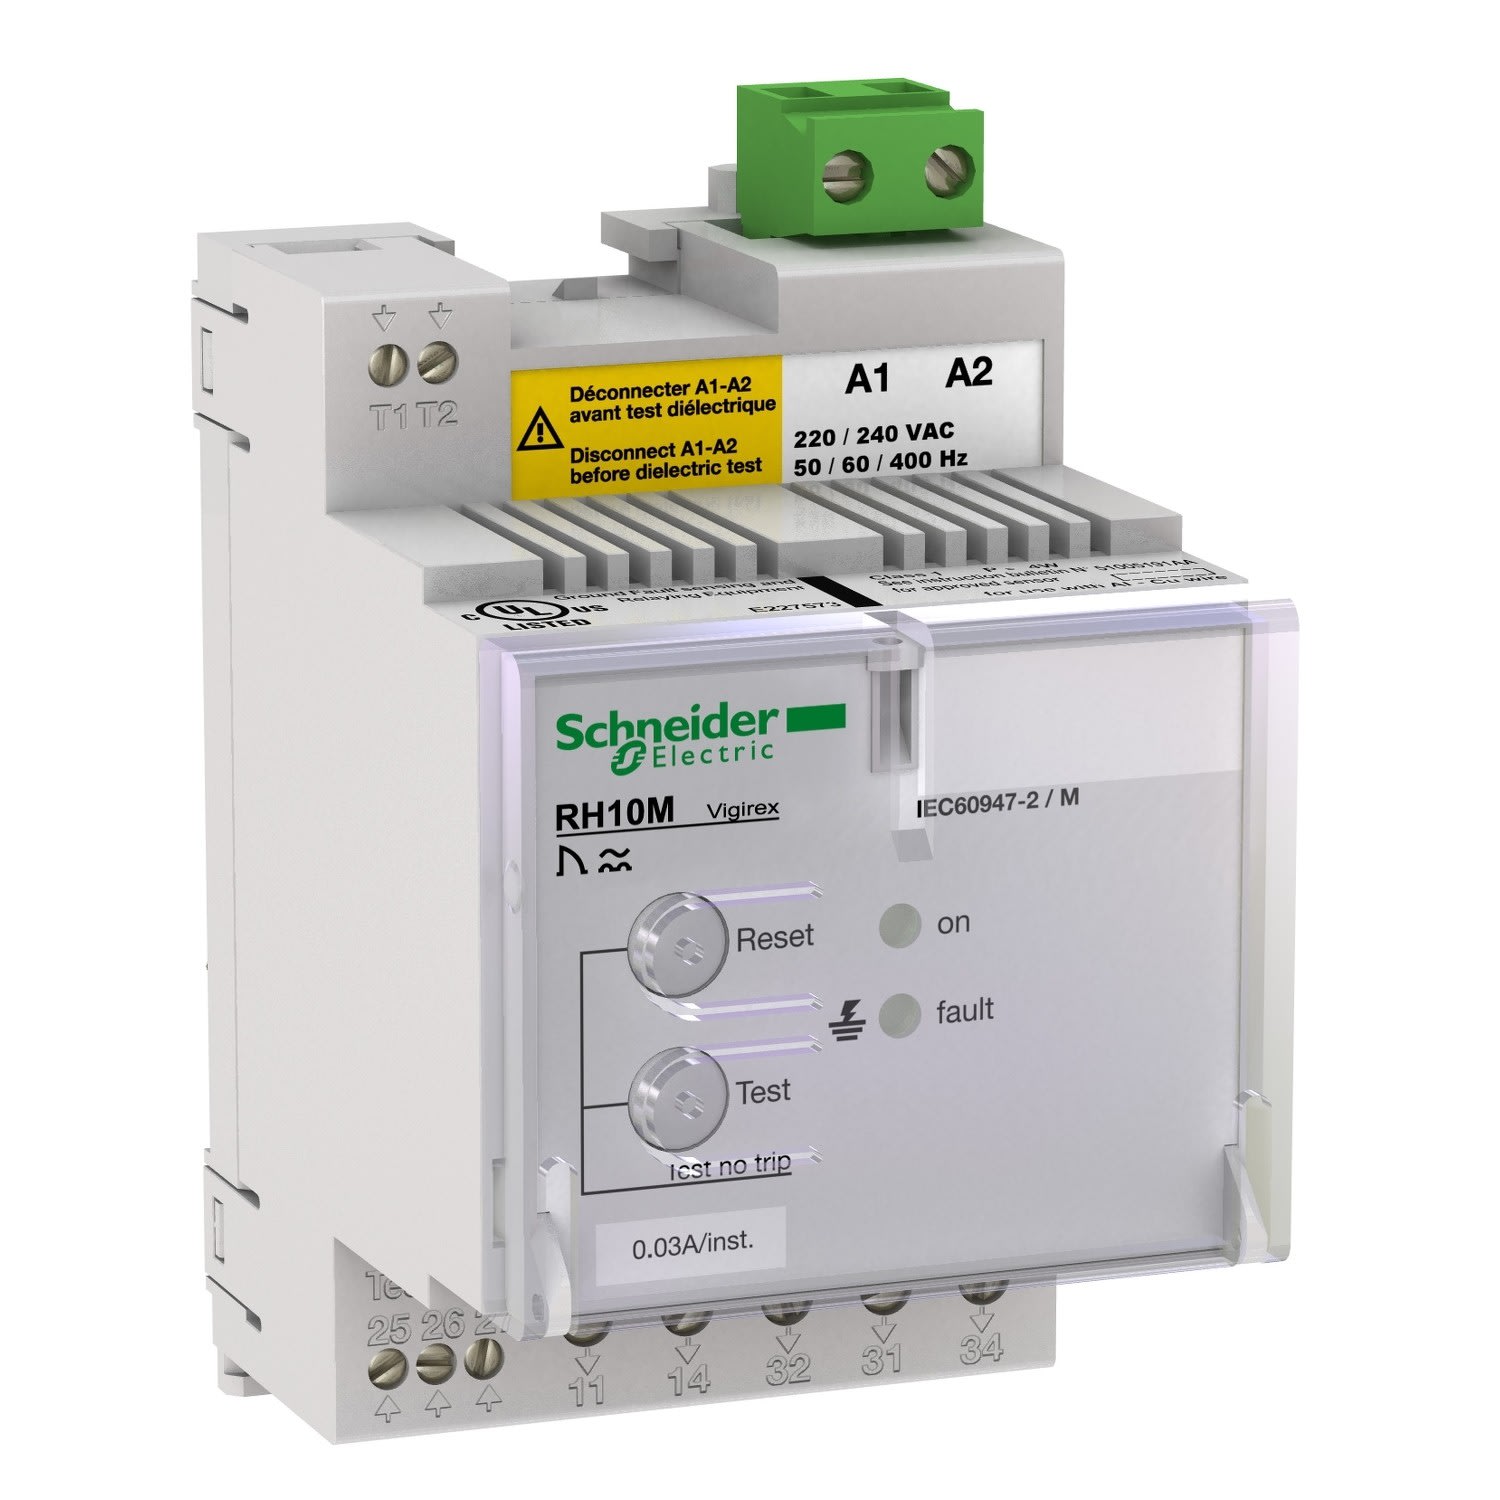 Schneider Electric - Vigirex RH10M 220-240VAC sensibilite 1A instantane